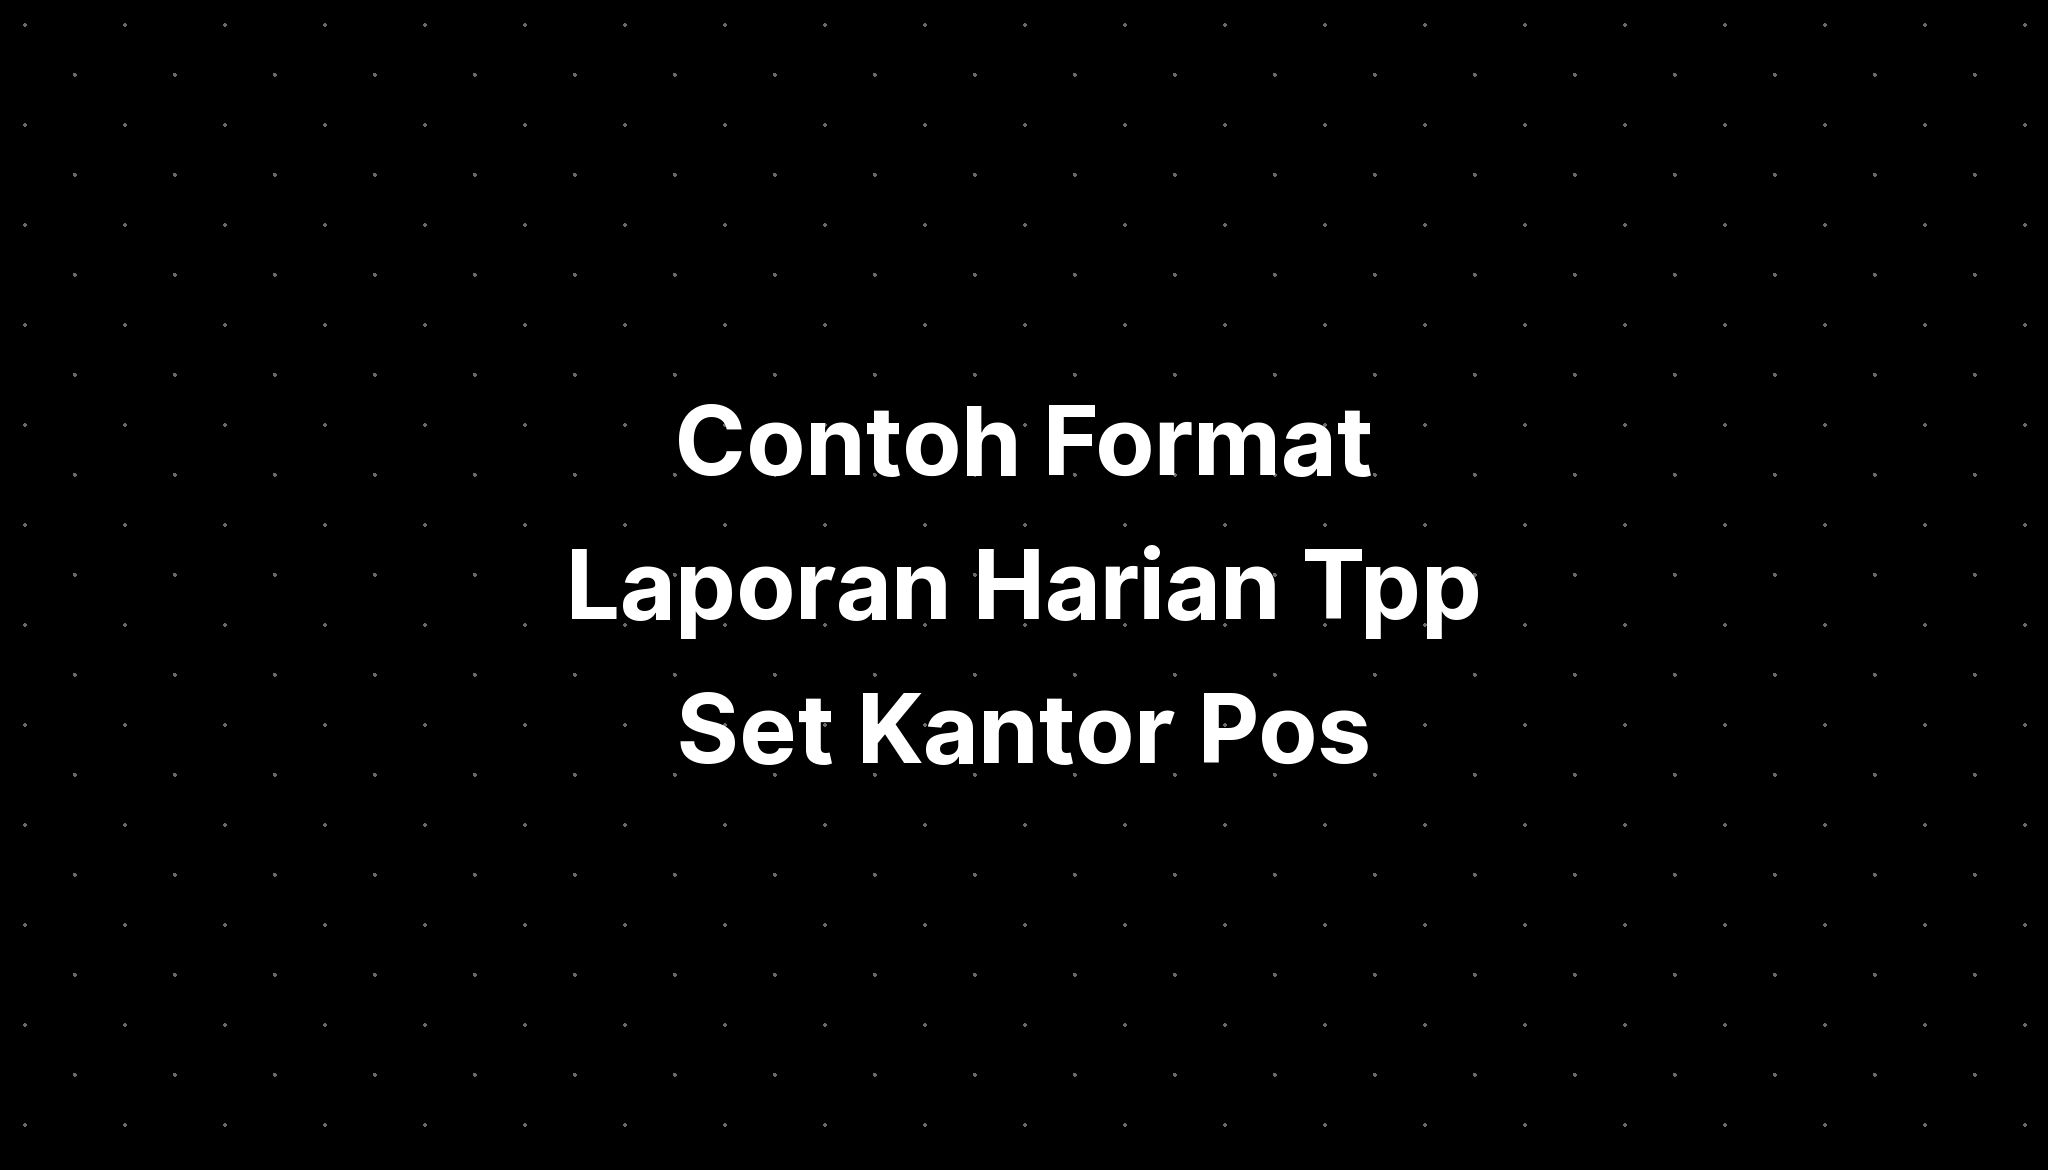 Contoh Format Laporan Harian Tpp Set Kantor Staf Imagesee - Riset